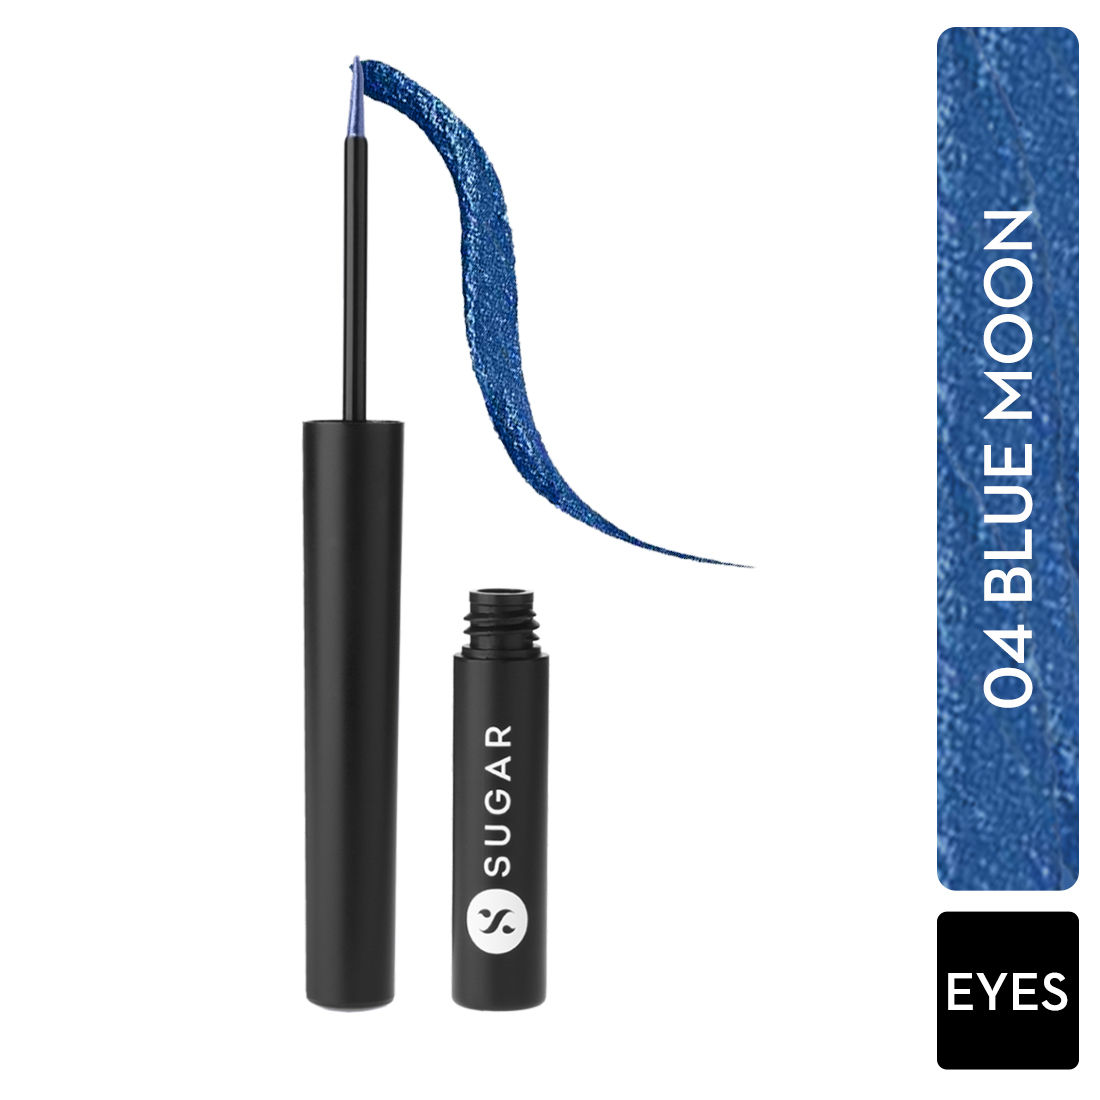 Buy SUGAR Cosmetics Eye Dared You So! Metallic Eyeliner - 04 Blue Moon (Metallic Royal Blue) - Purplle